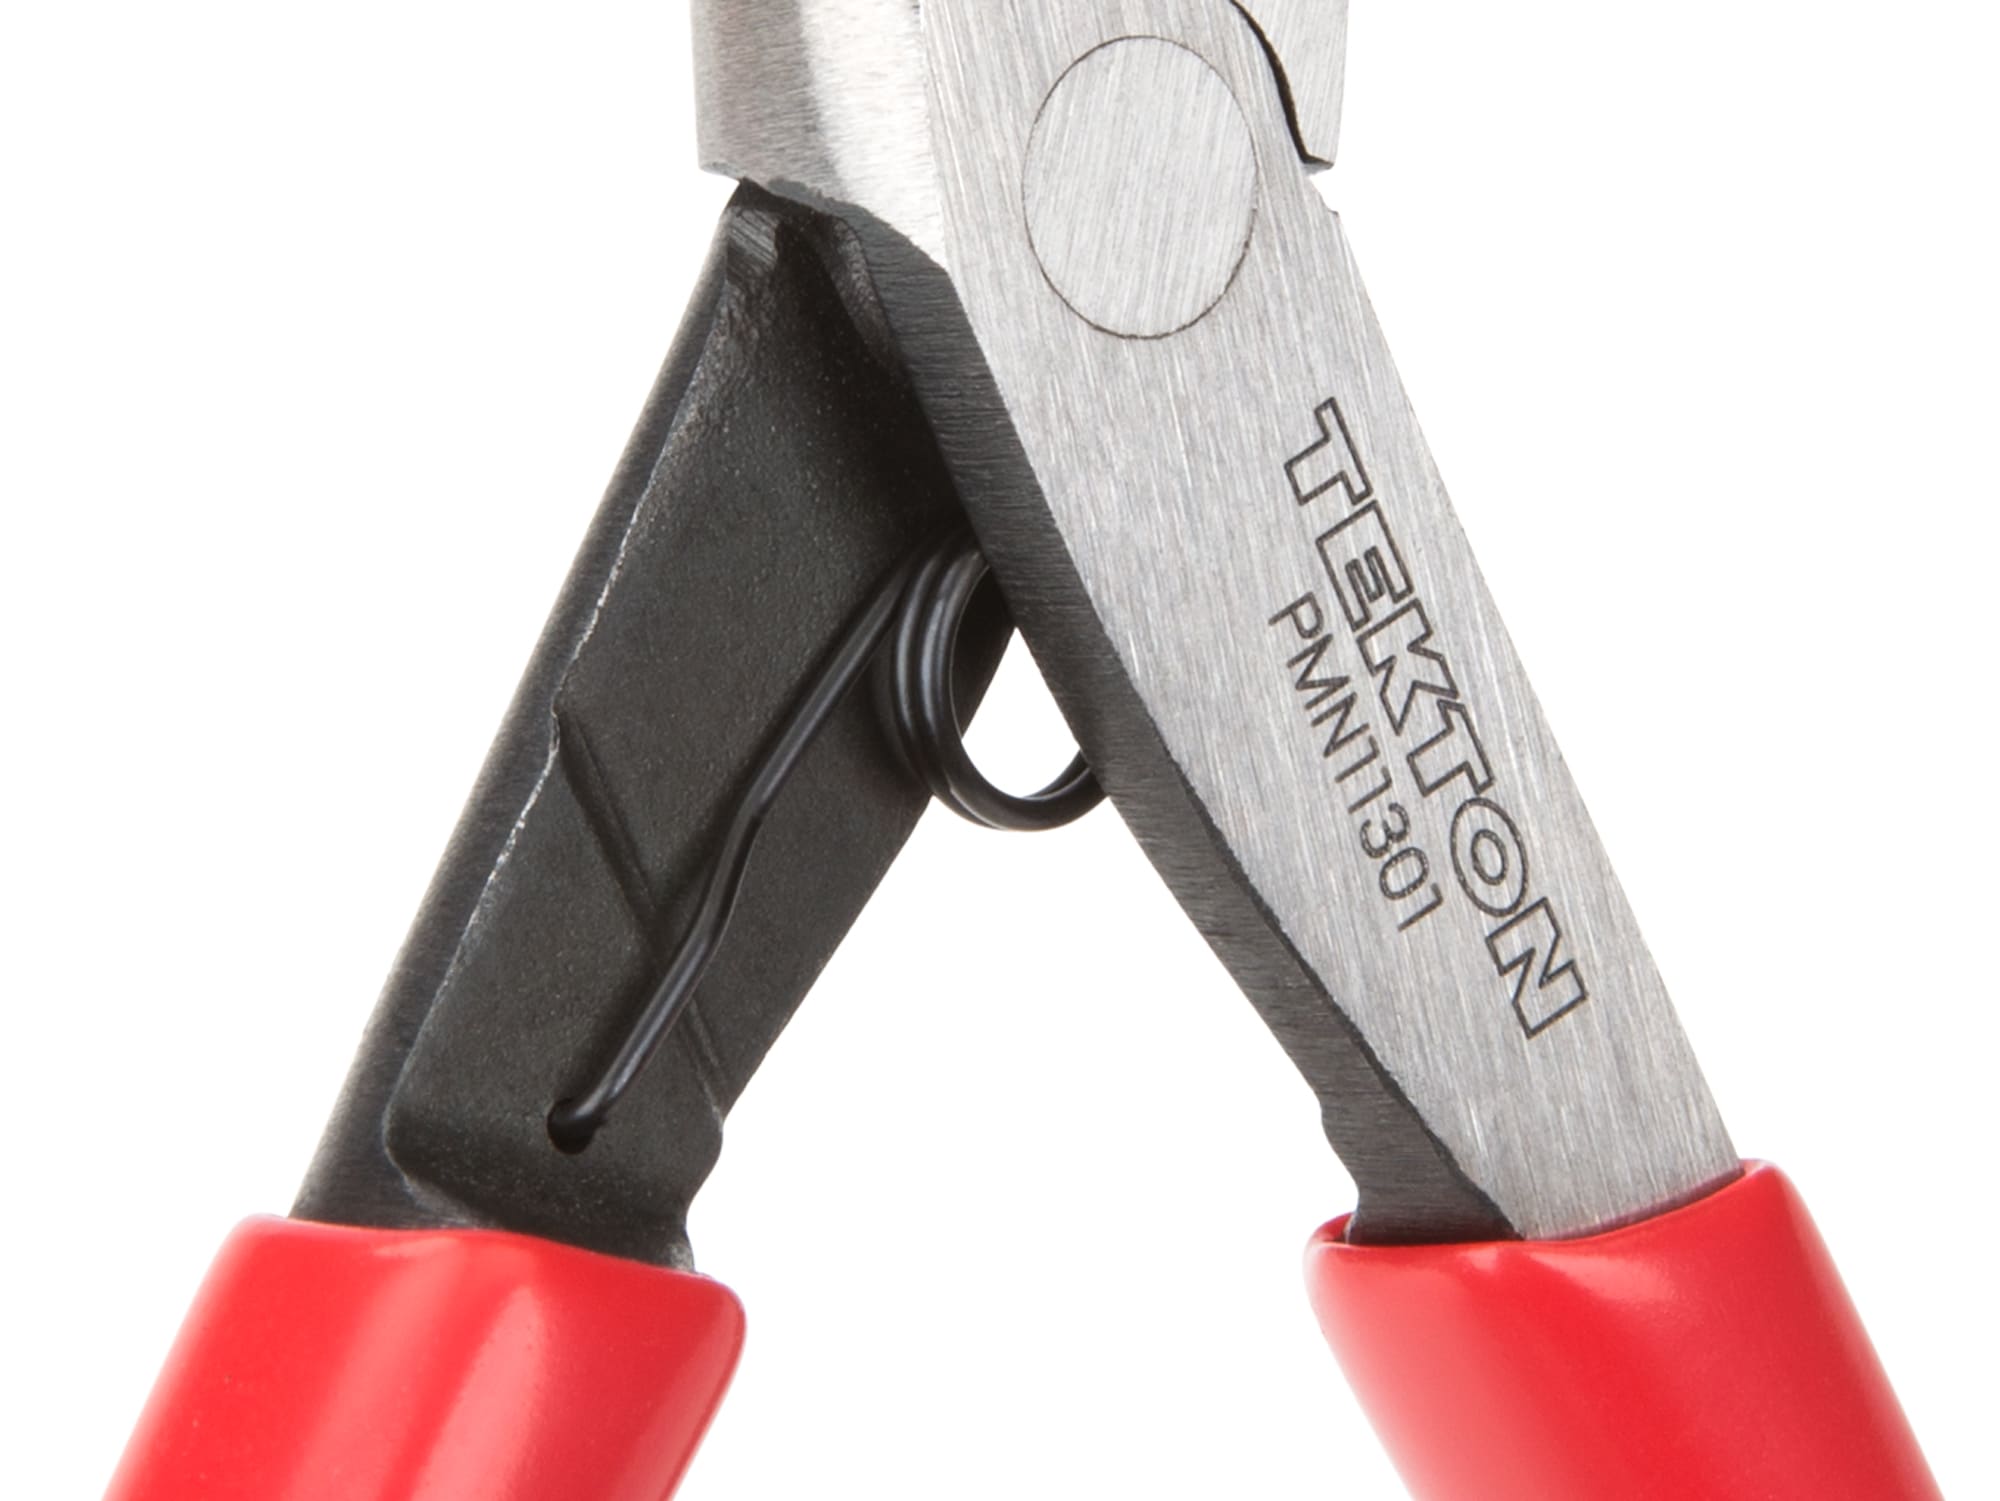 TEKTON Gripping Pliers Set, 3-Piece (Long Nose, Bent Nose) | PGF99101